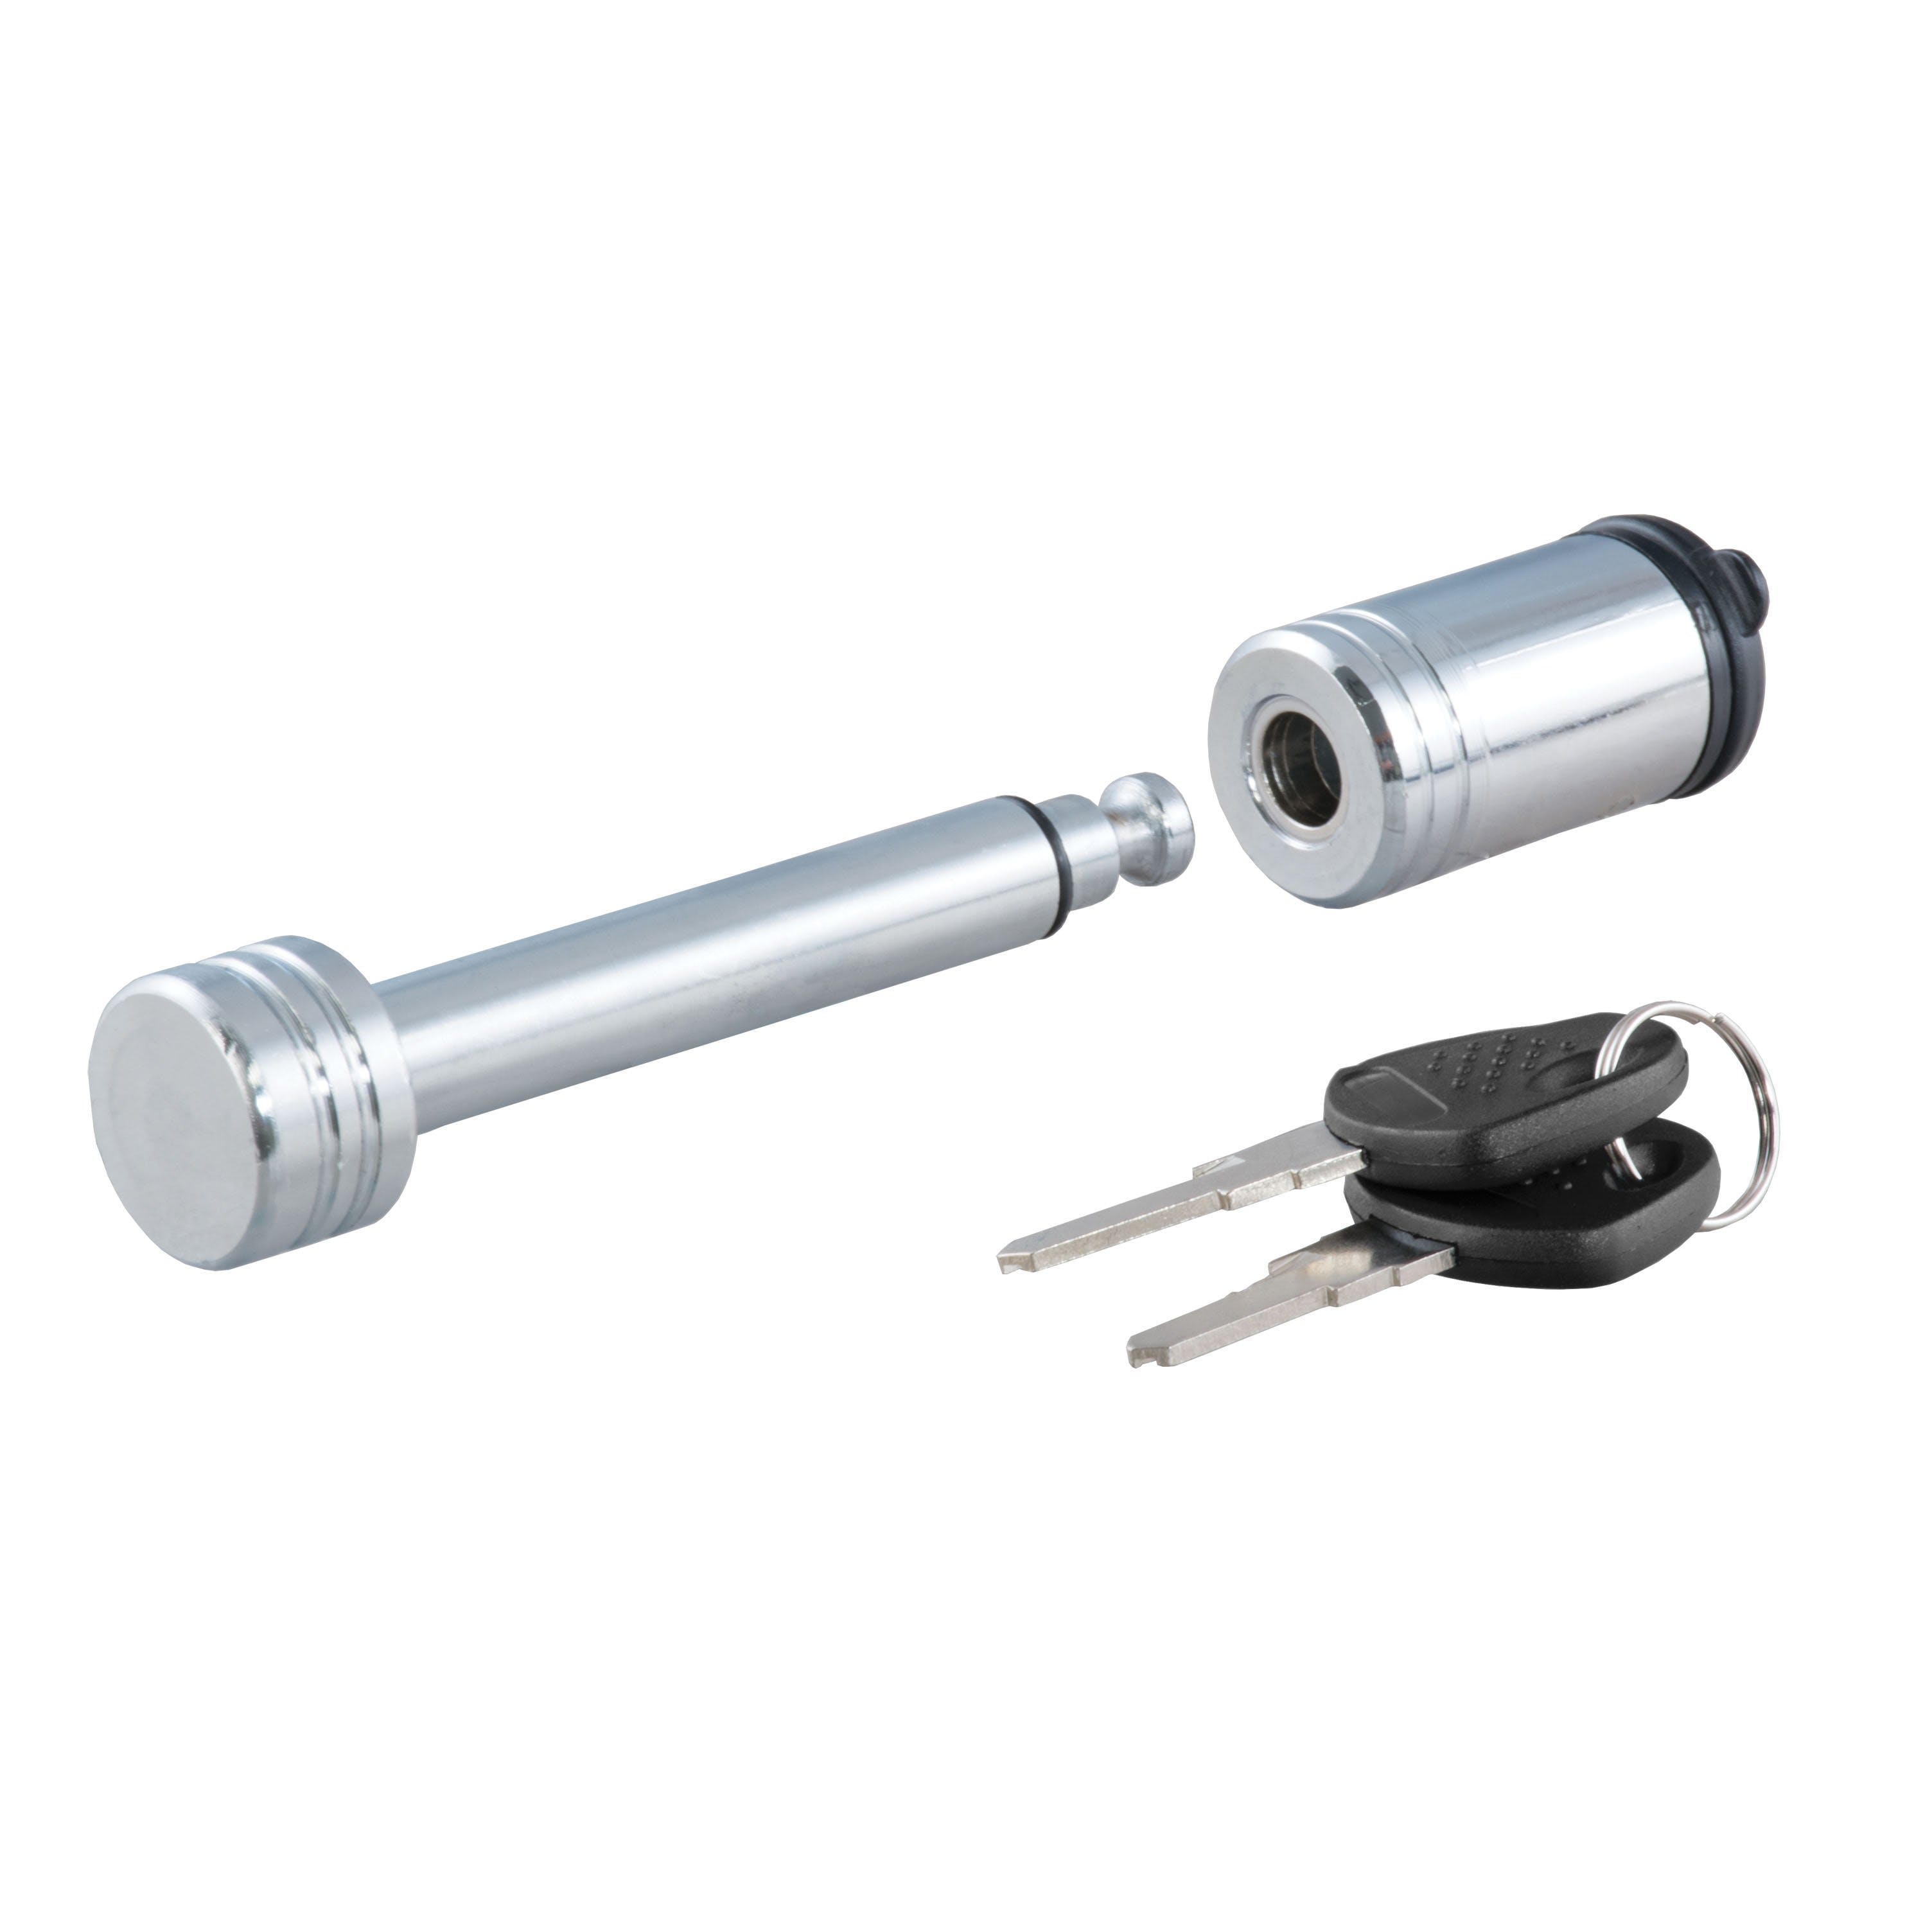 CURT 23501 1/2 Hitch Lock (1-1/4 Receiver, Barbell, Chrome)